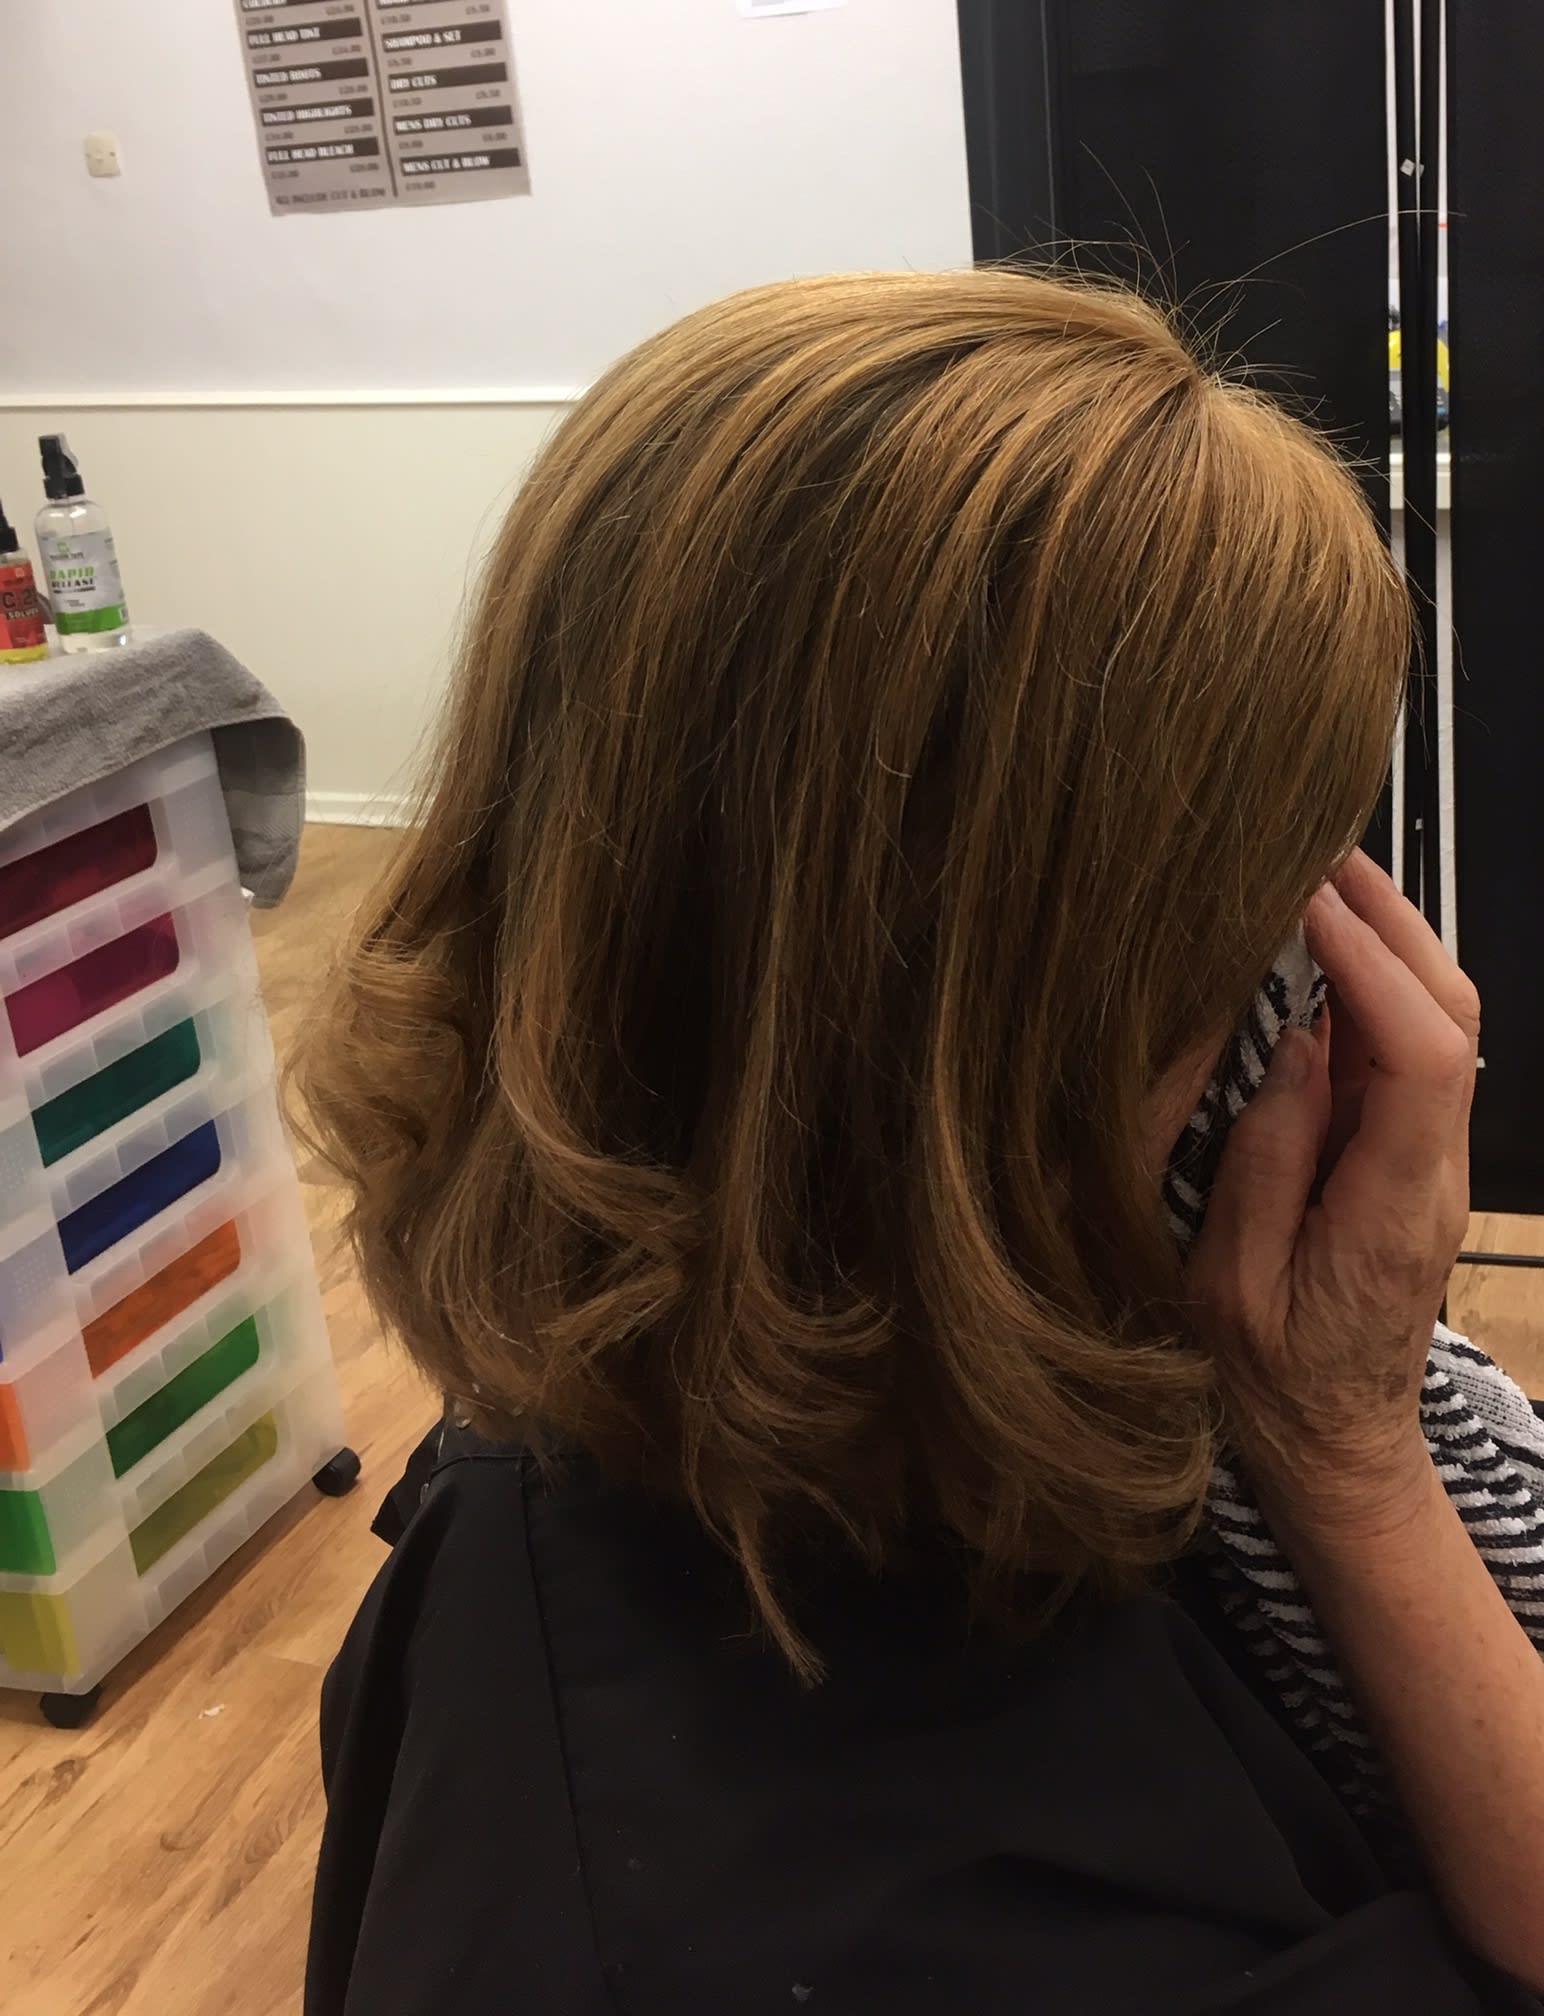 Images Adele Hair Loss Technician /Hairdresser